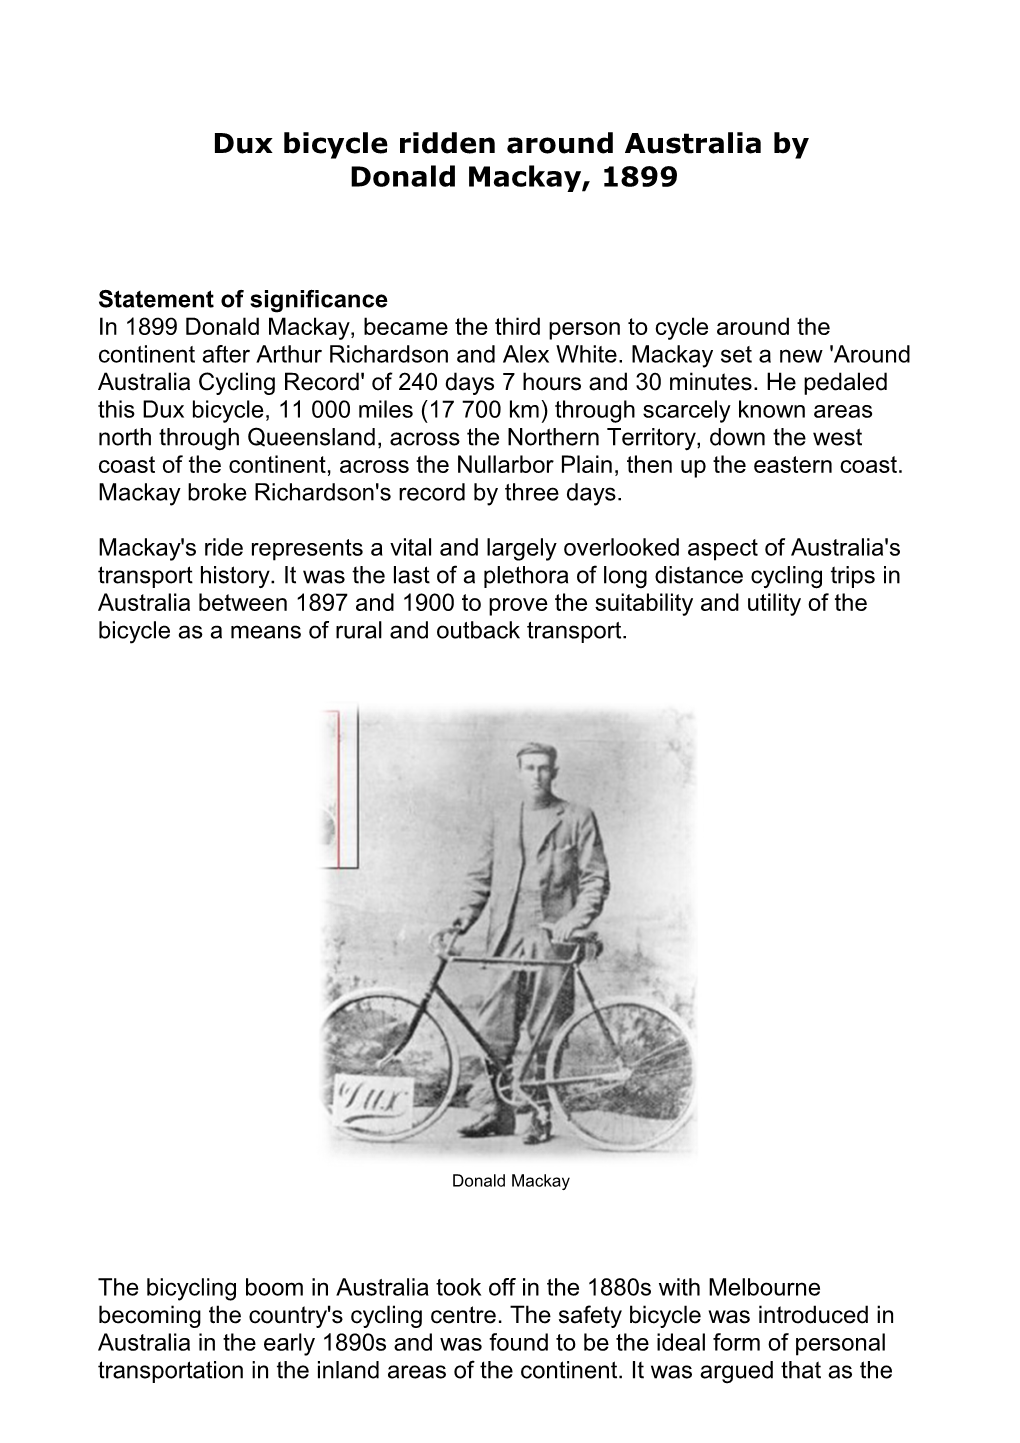 Dux Bicycle Ridden Around Australia By